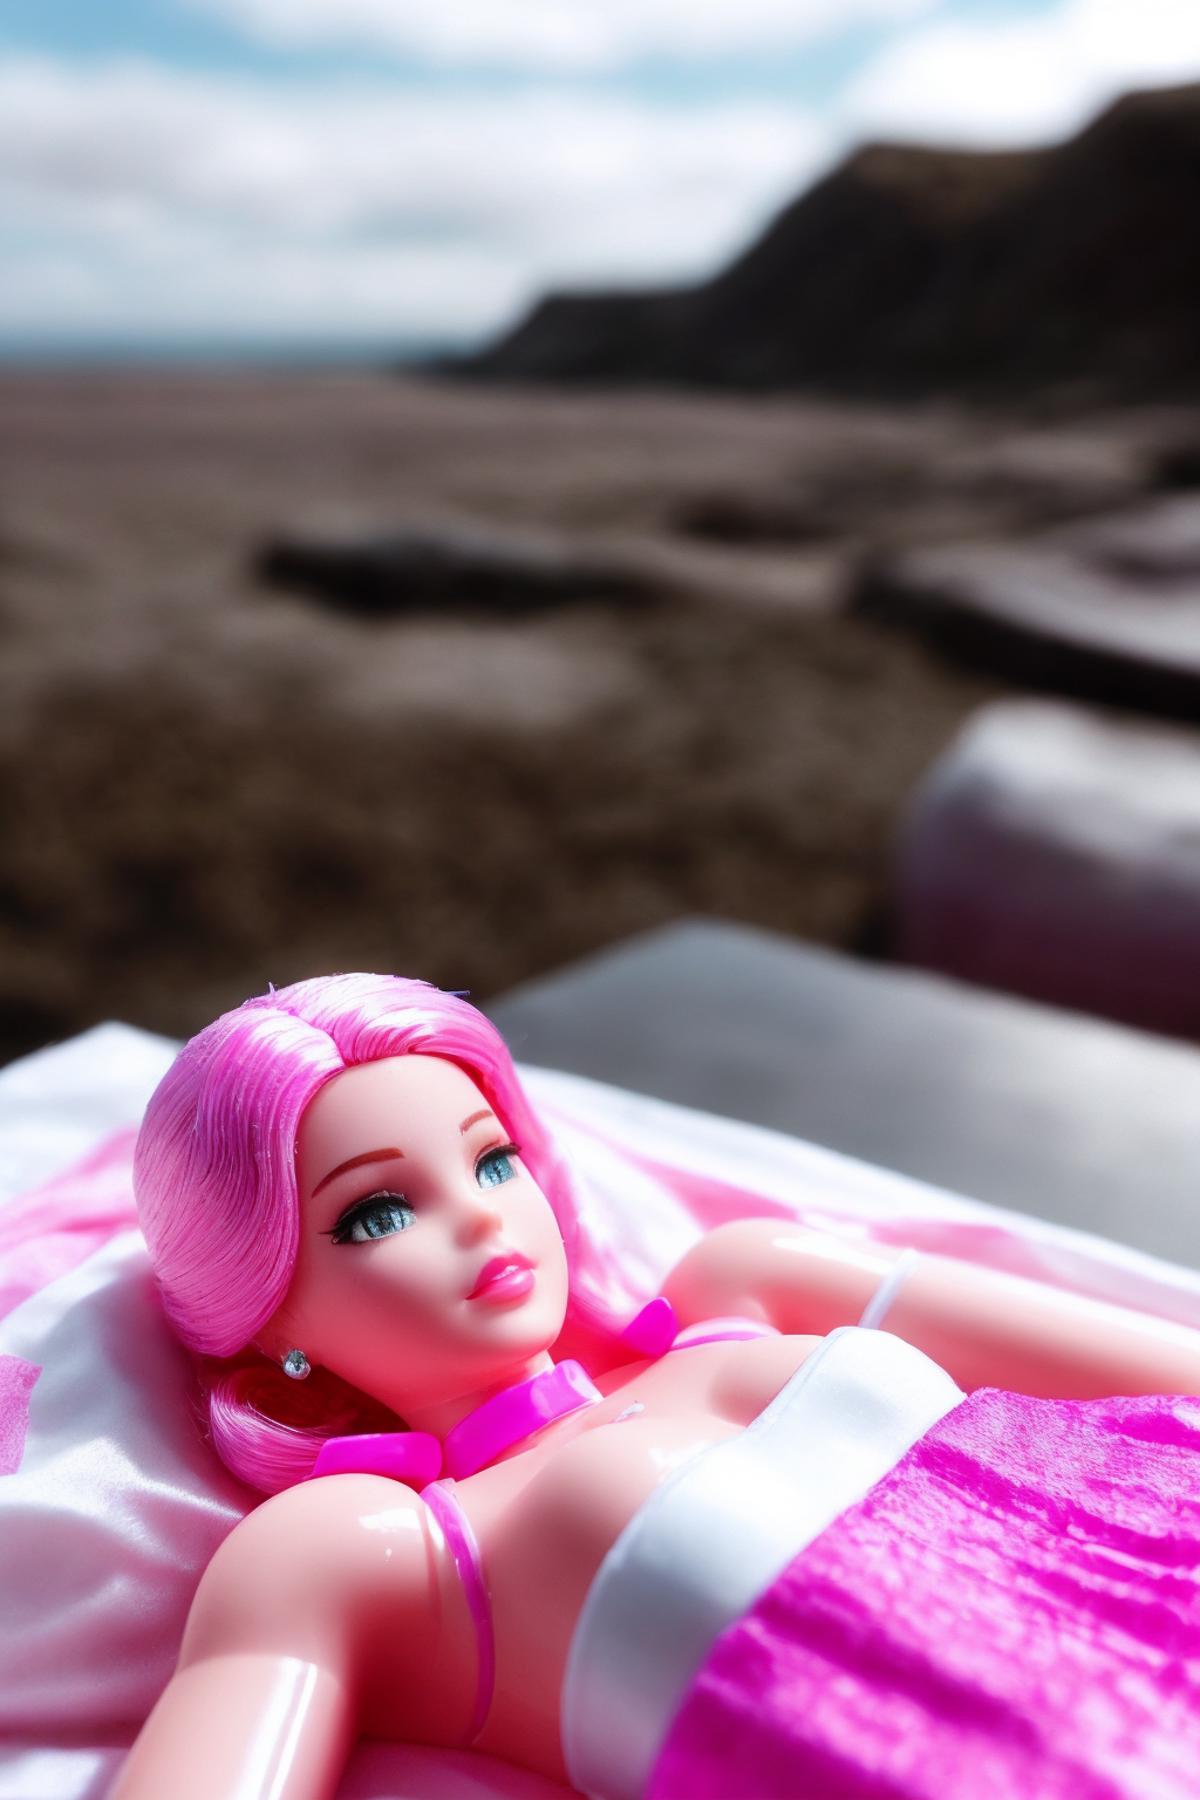 Barbiecore - Barbify Anything! image by mrbaralgin